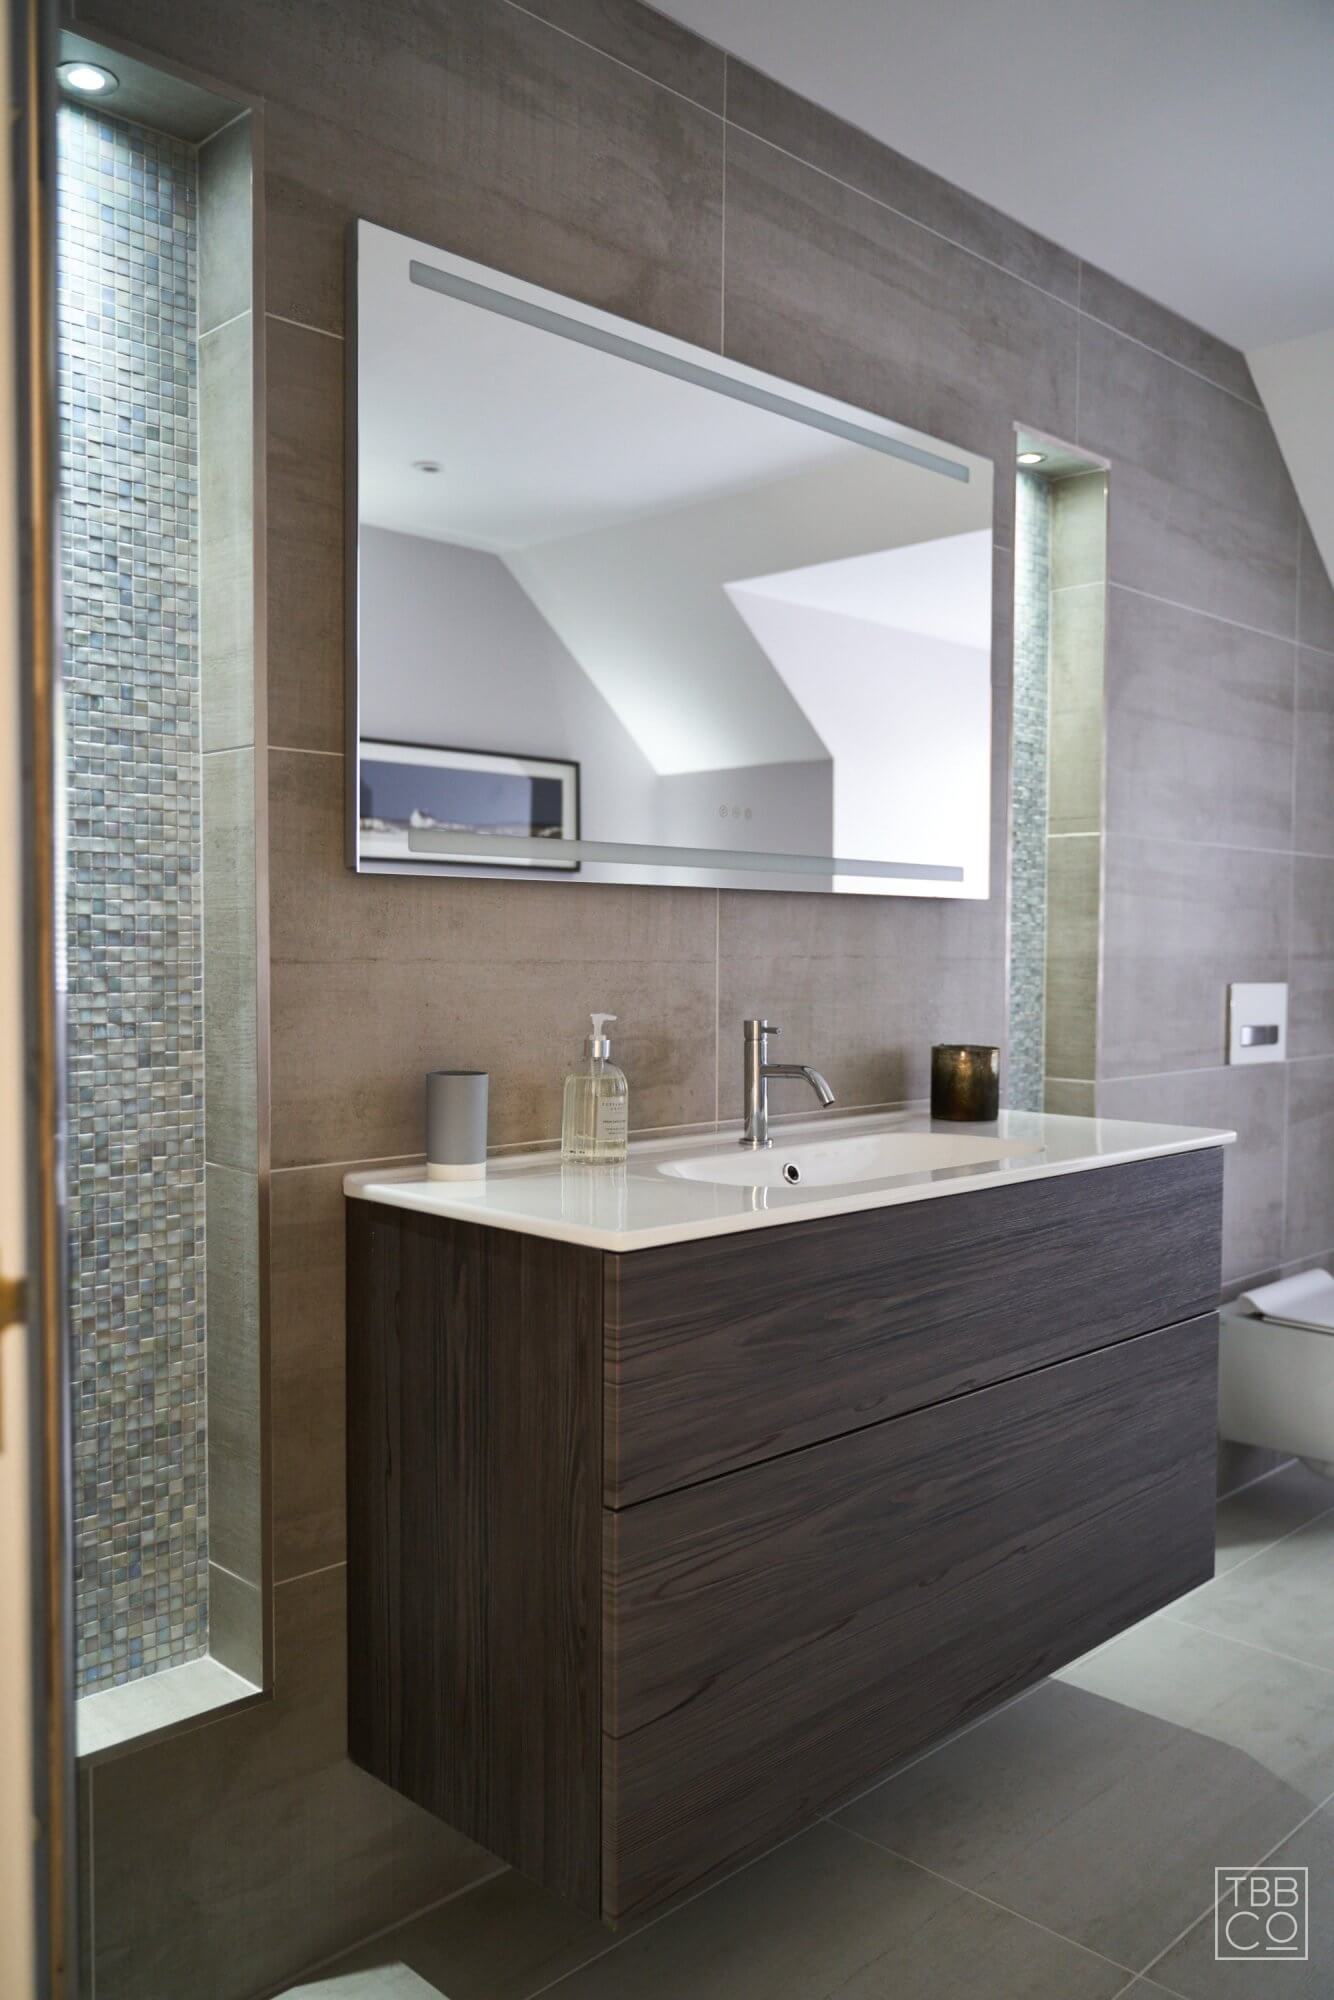 Timber Bathroom Vanity with Large Bathroom Mirror Above